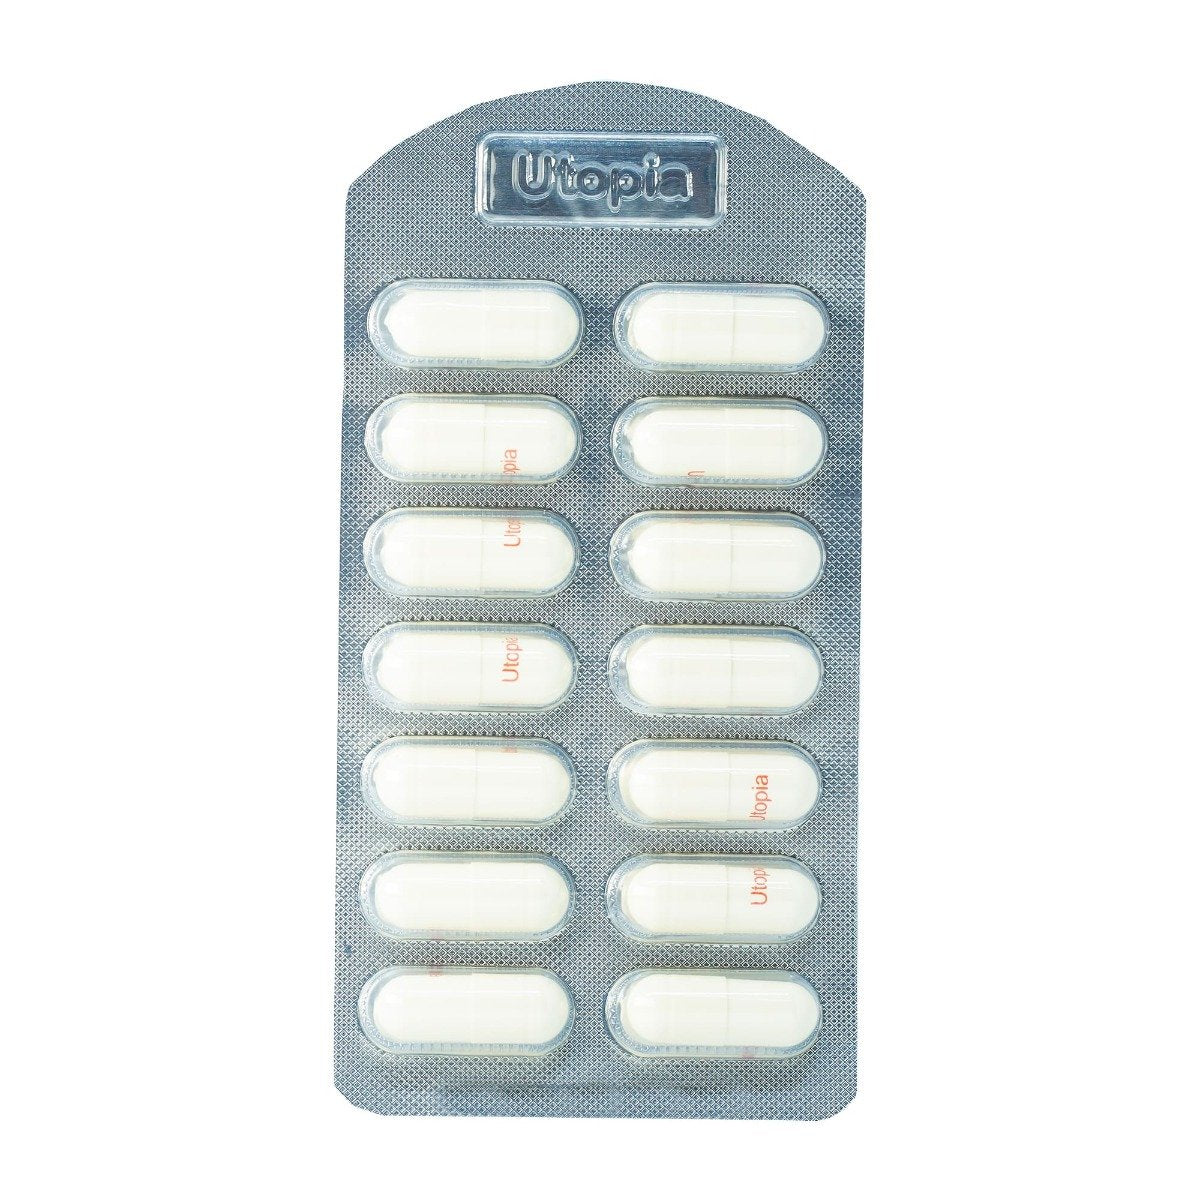 Downoprazol 40 mg-1100 mg - 14 Capsules - Bloom Pharmacy